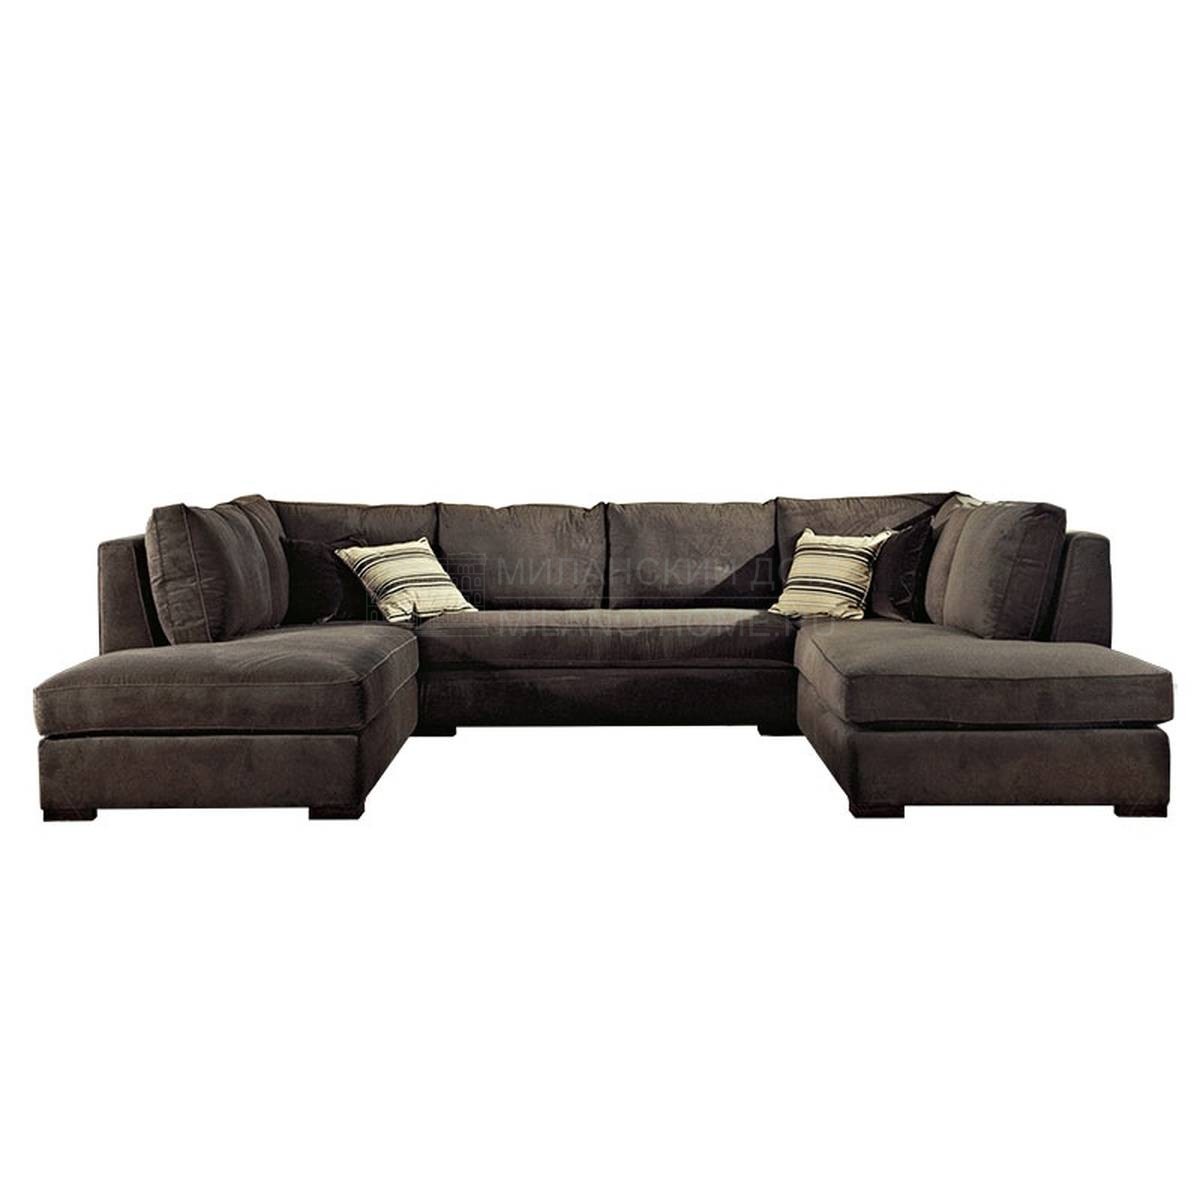 Модульный диван Grigiochiaro/ sofa из Италии фабрики SOFTHOUSE